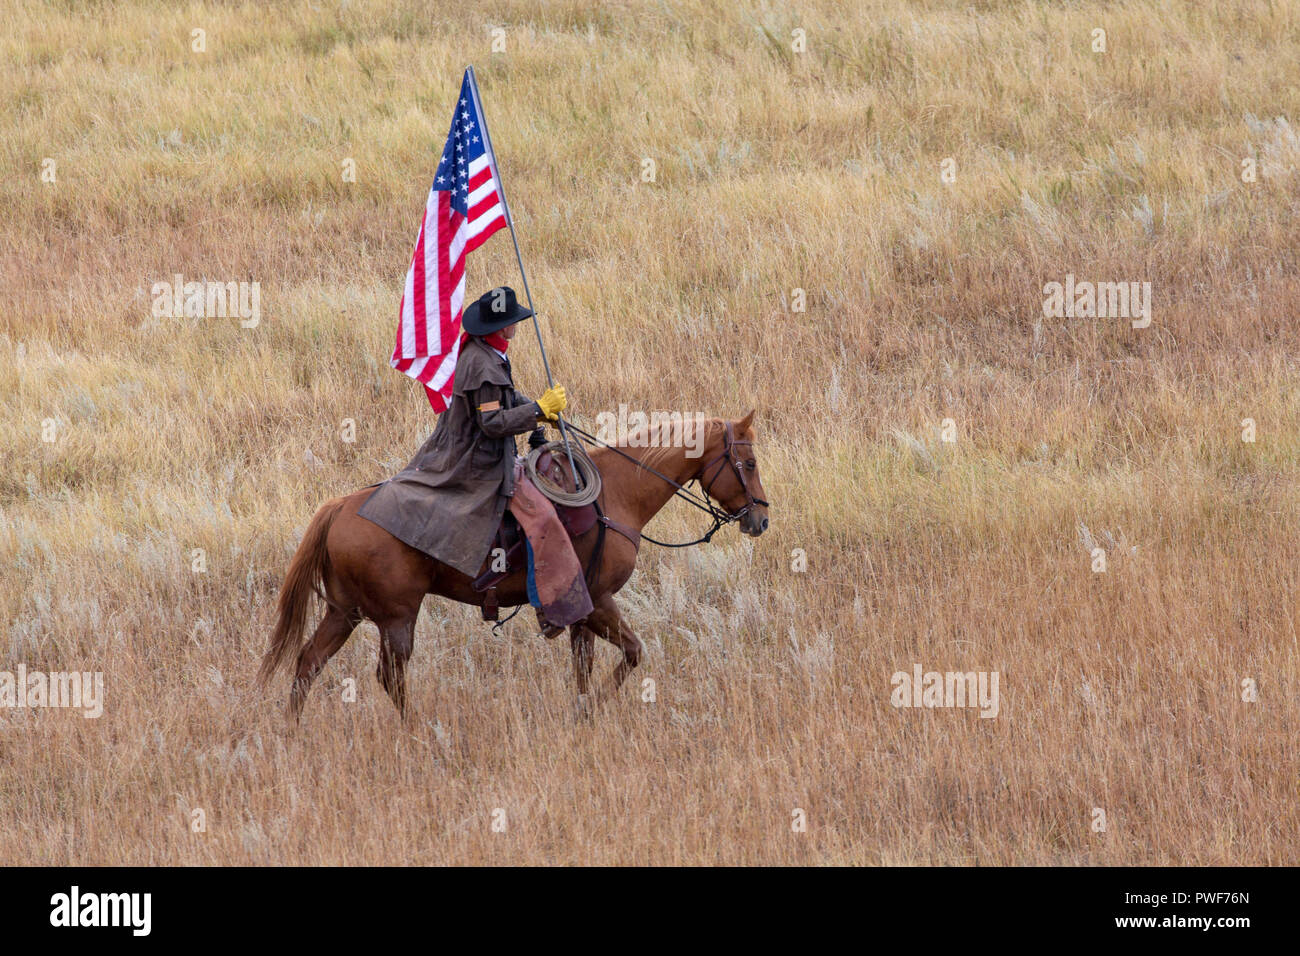 Flag bearers at the Buffalo Roundup in South Dakota Stock Photo